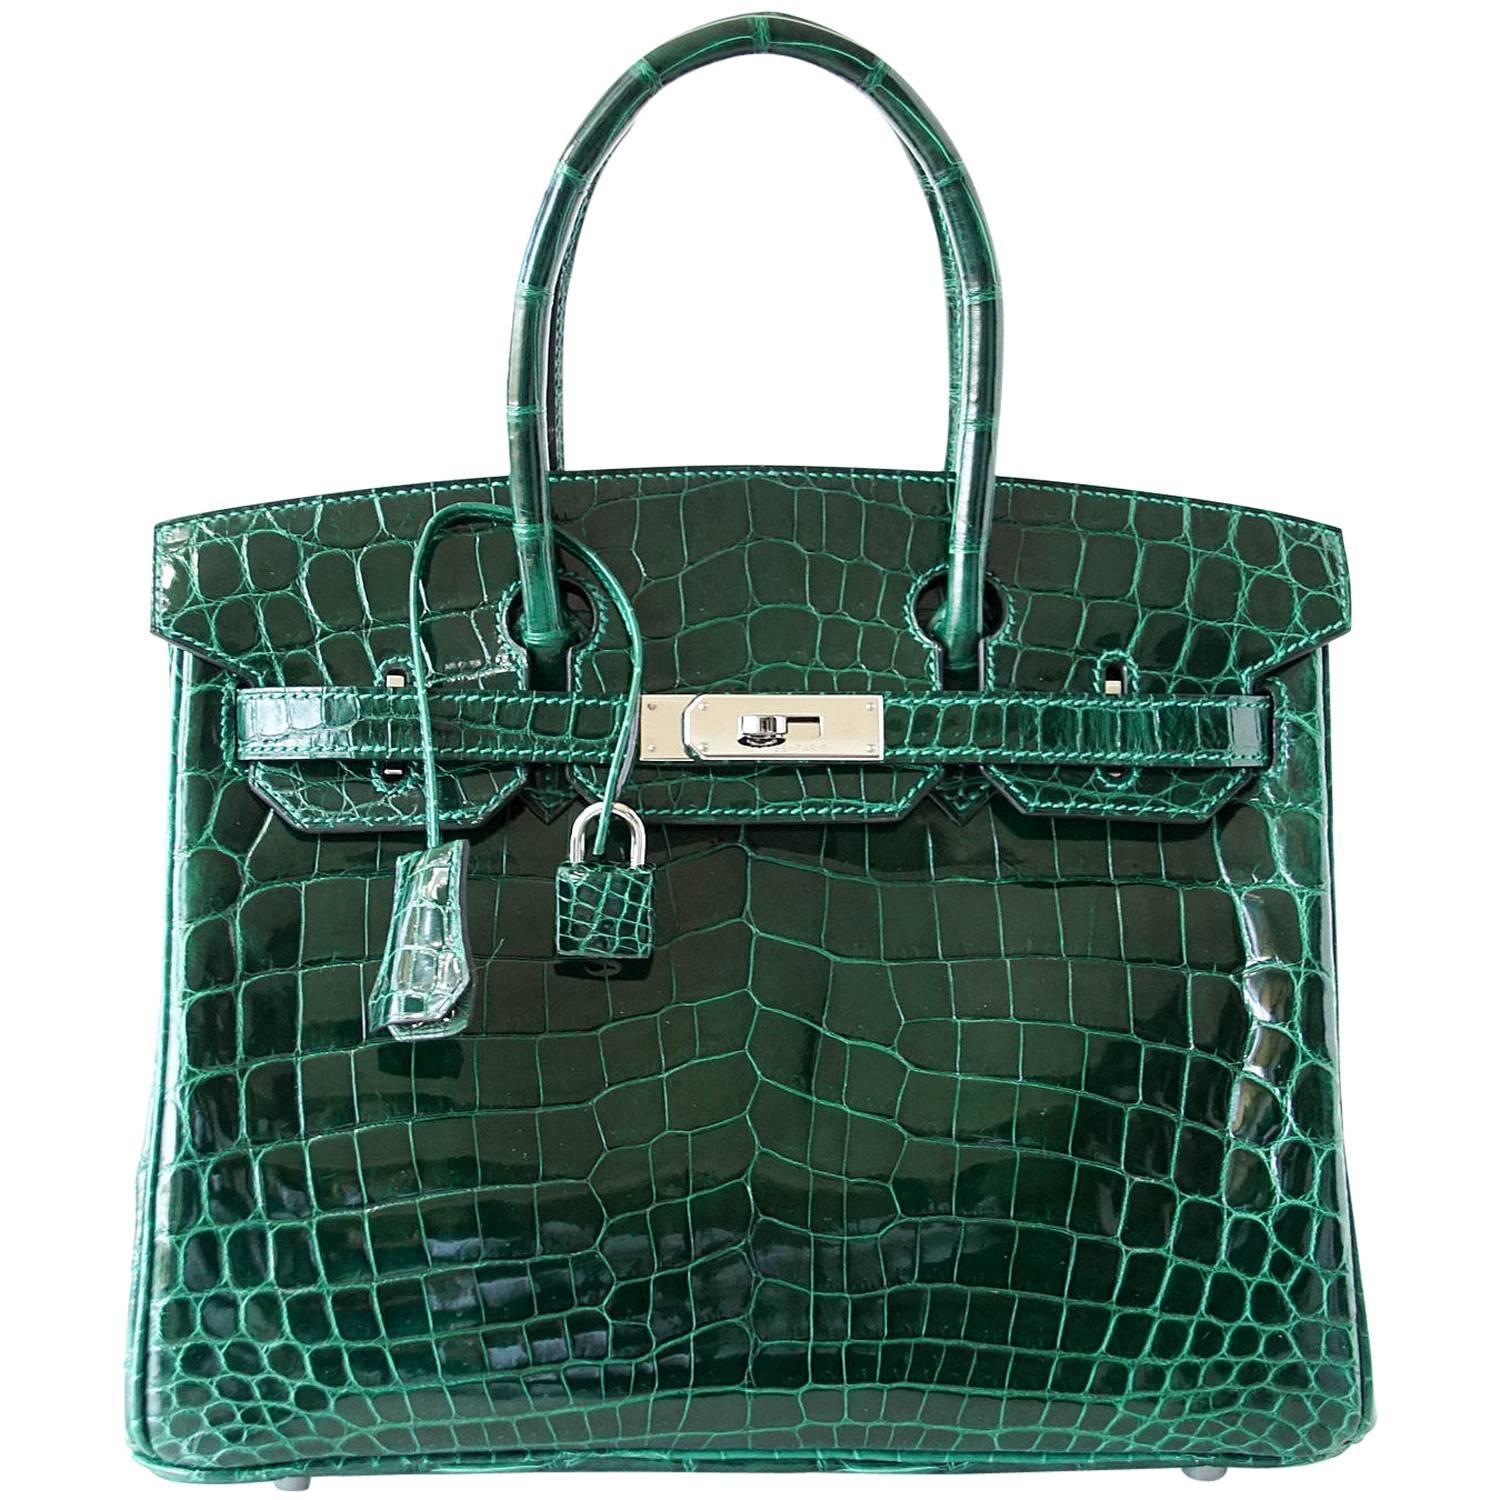 HERMES BIRKIN 30 Bag Emerald Emeraude Green Crocodile Palladium For Sale at 1stdibs